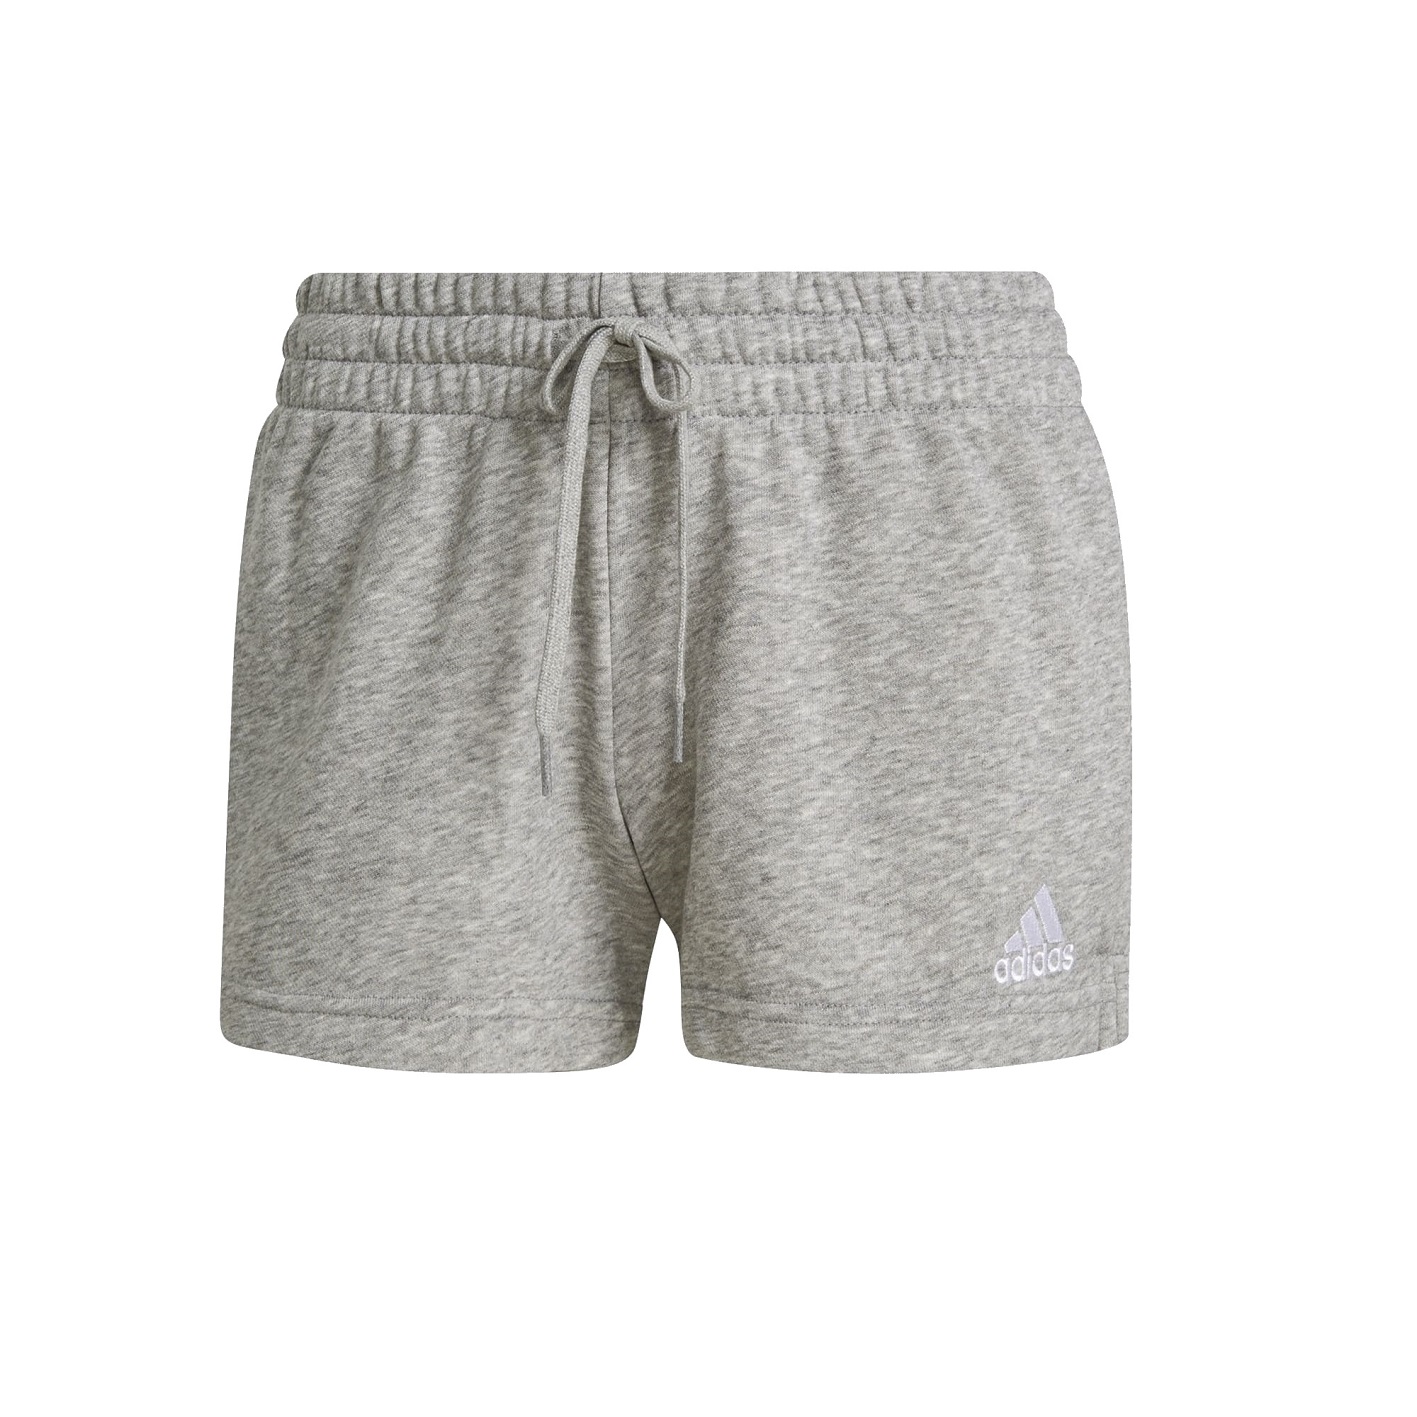 Gezichtsvermogen hooi hoeveelheid verkoop ☆ Adidas Essential Regular Damen Shorts grau - hier bestellen!